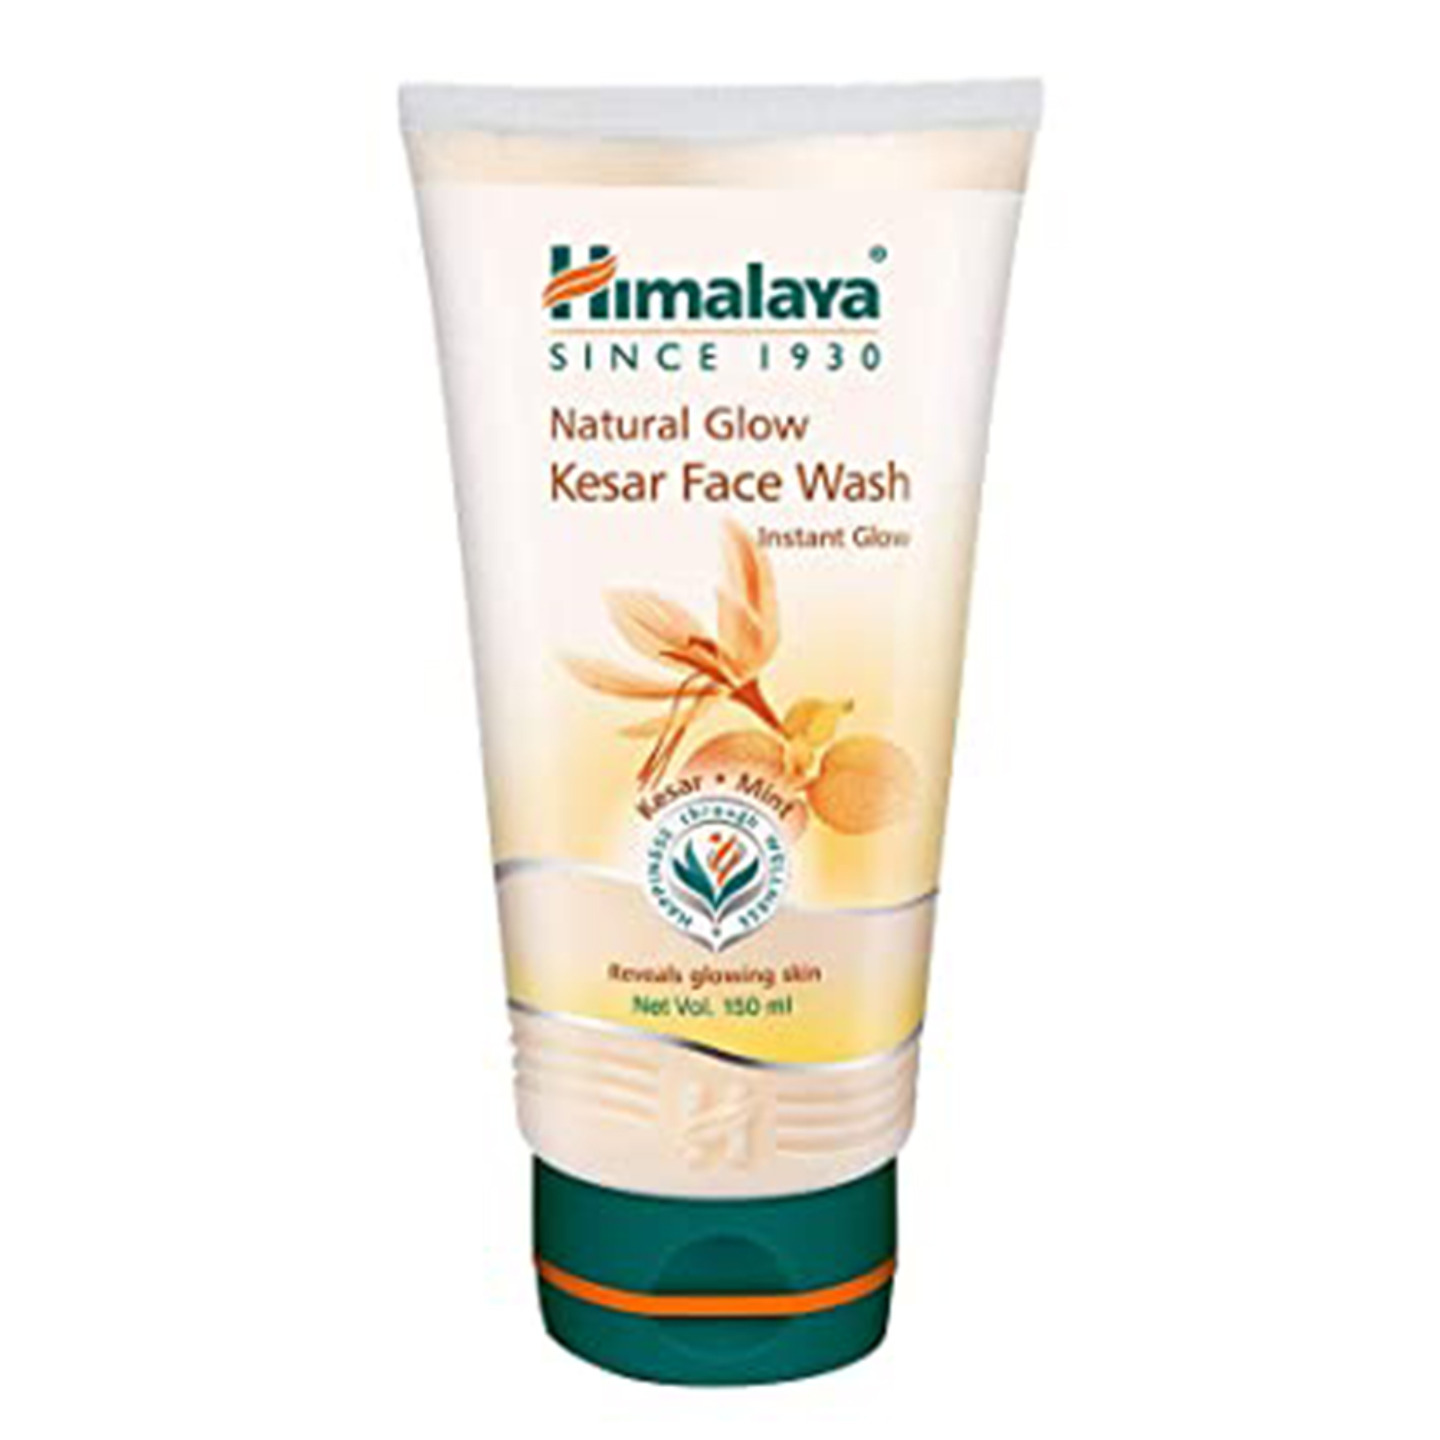 Himalaya Natural Glow Kesar Face Wash (150ml)